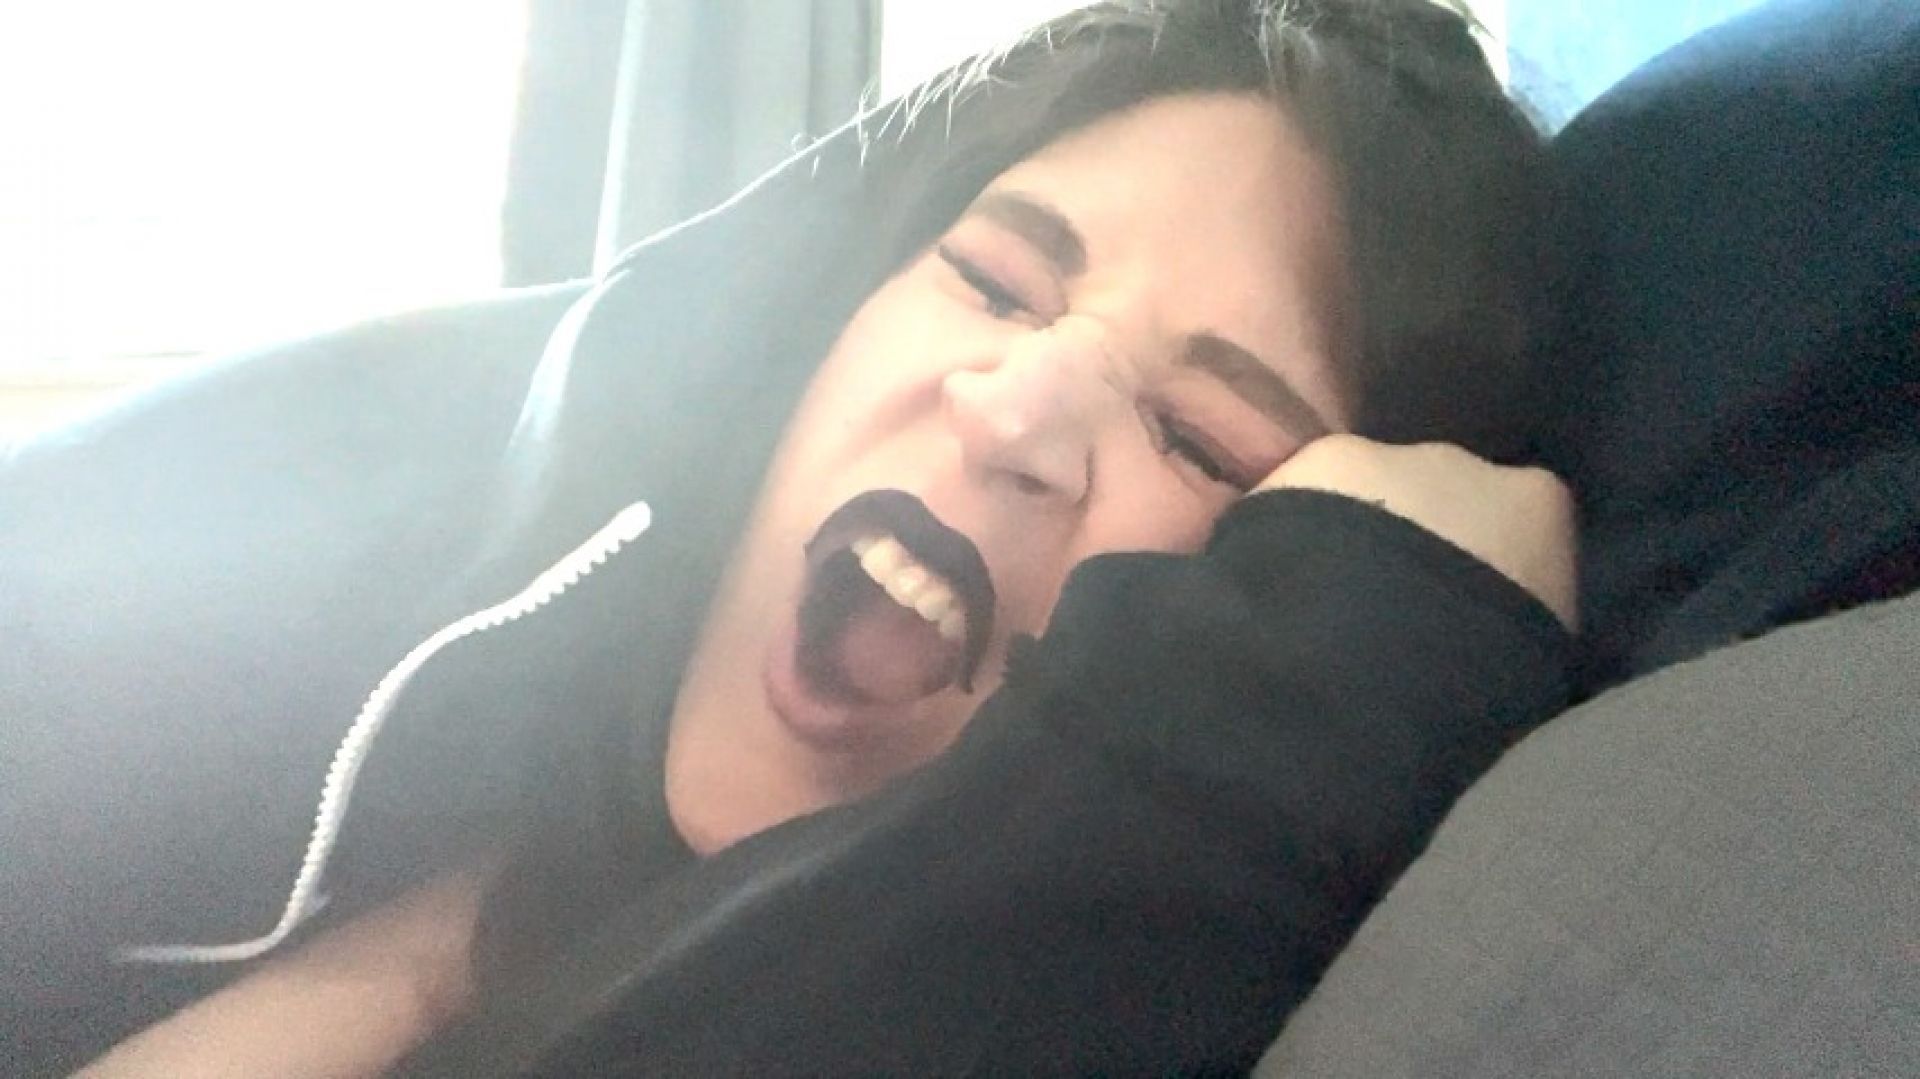 SO SLEEPY - Goth girl tired and yawning